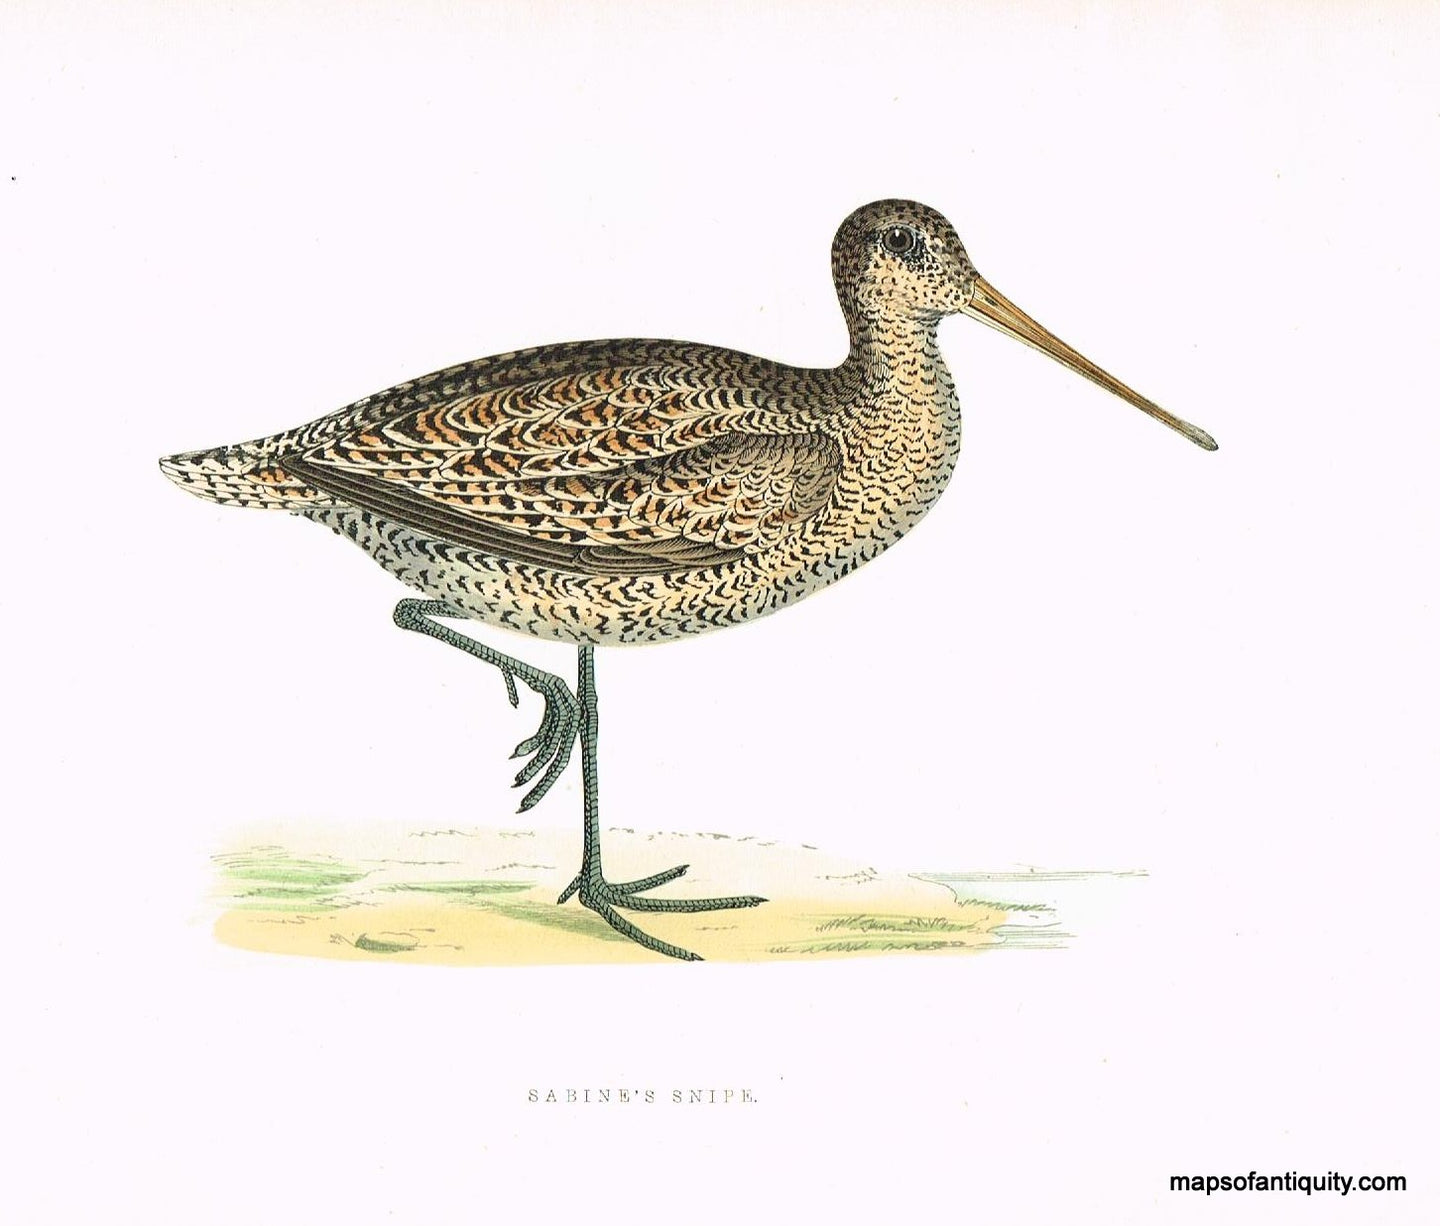 Antique-Hand-Colored-Engraved-Illustration-Sabine's-Snipe-Morris-bird-Natural-History-Birds-1851-Morris-Maps-Of-Antiquity